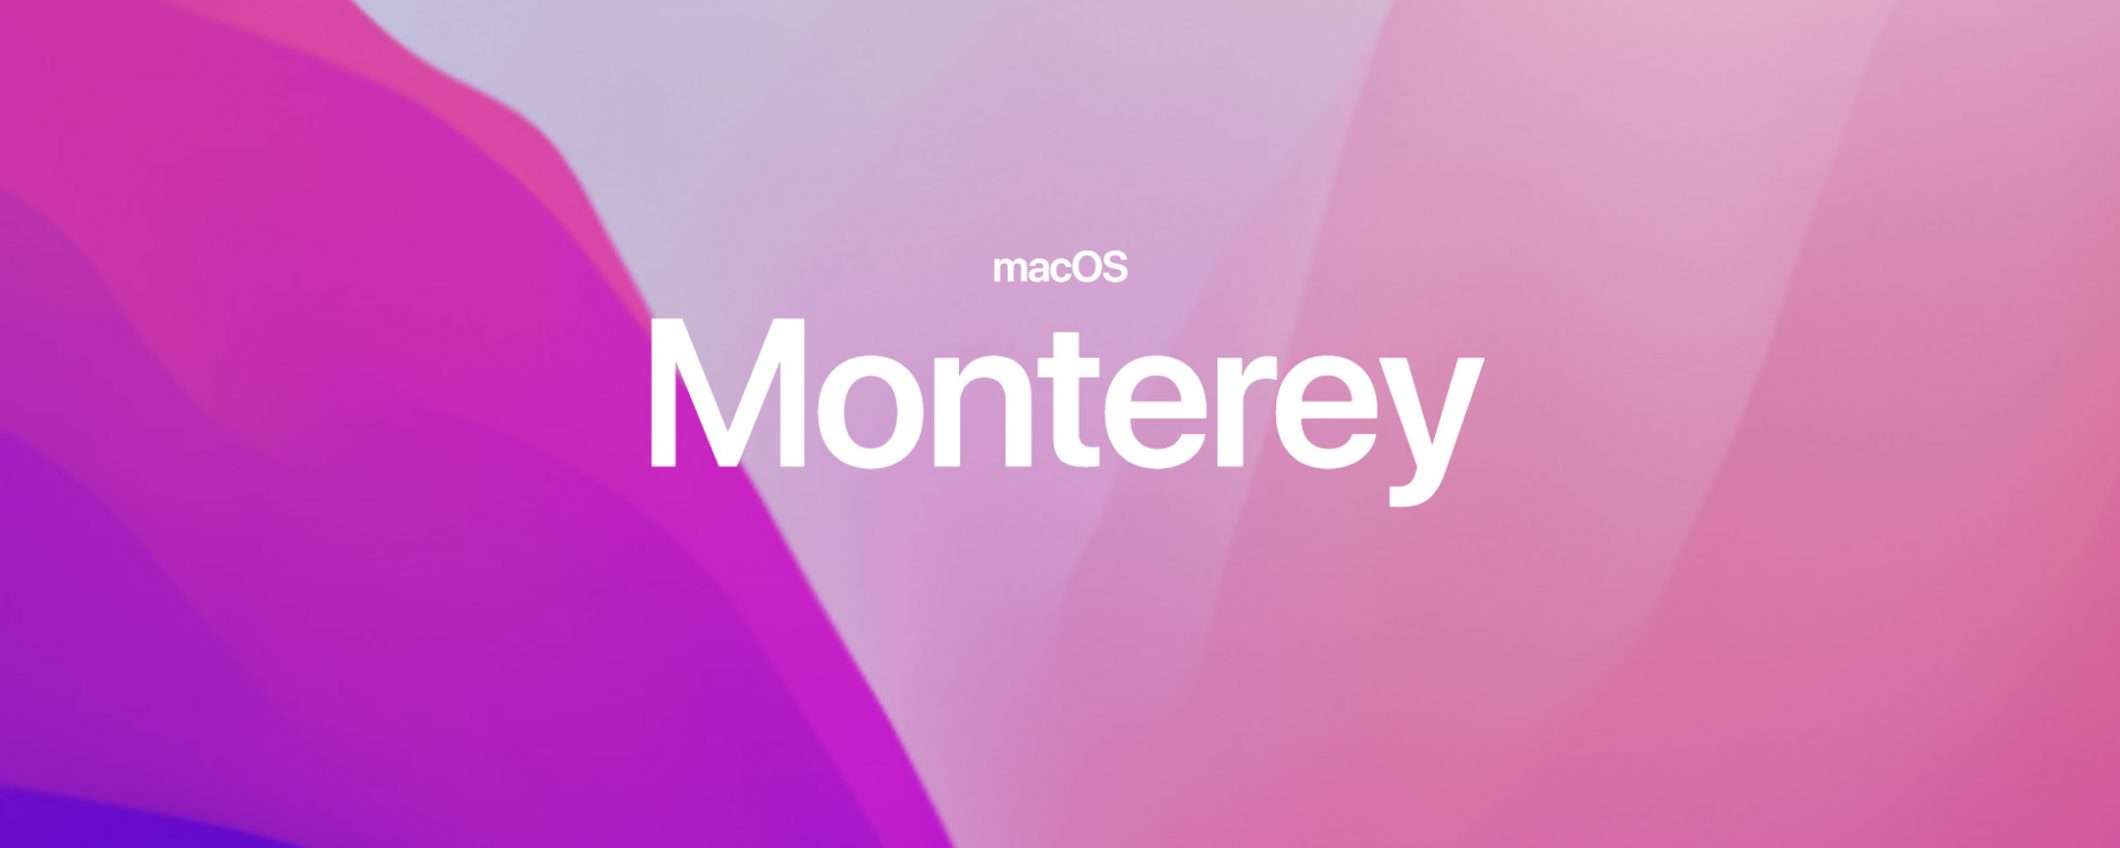 macOS Monterey: disponibile la prima beta pubblica